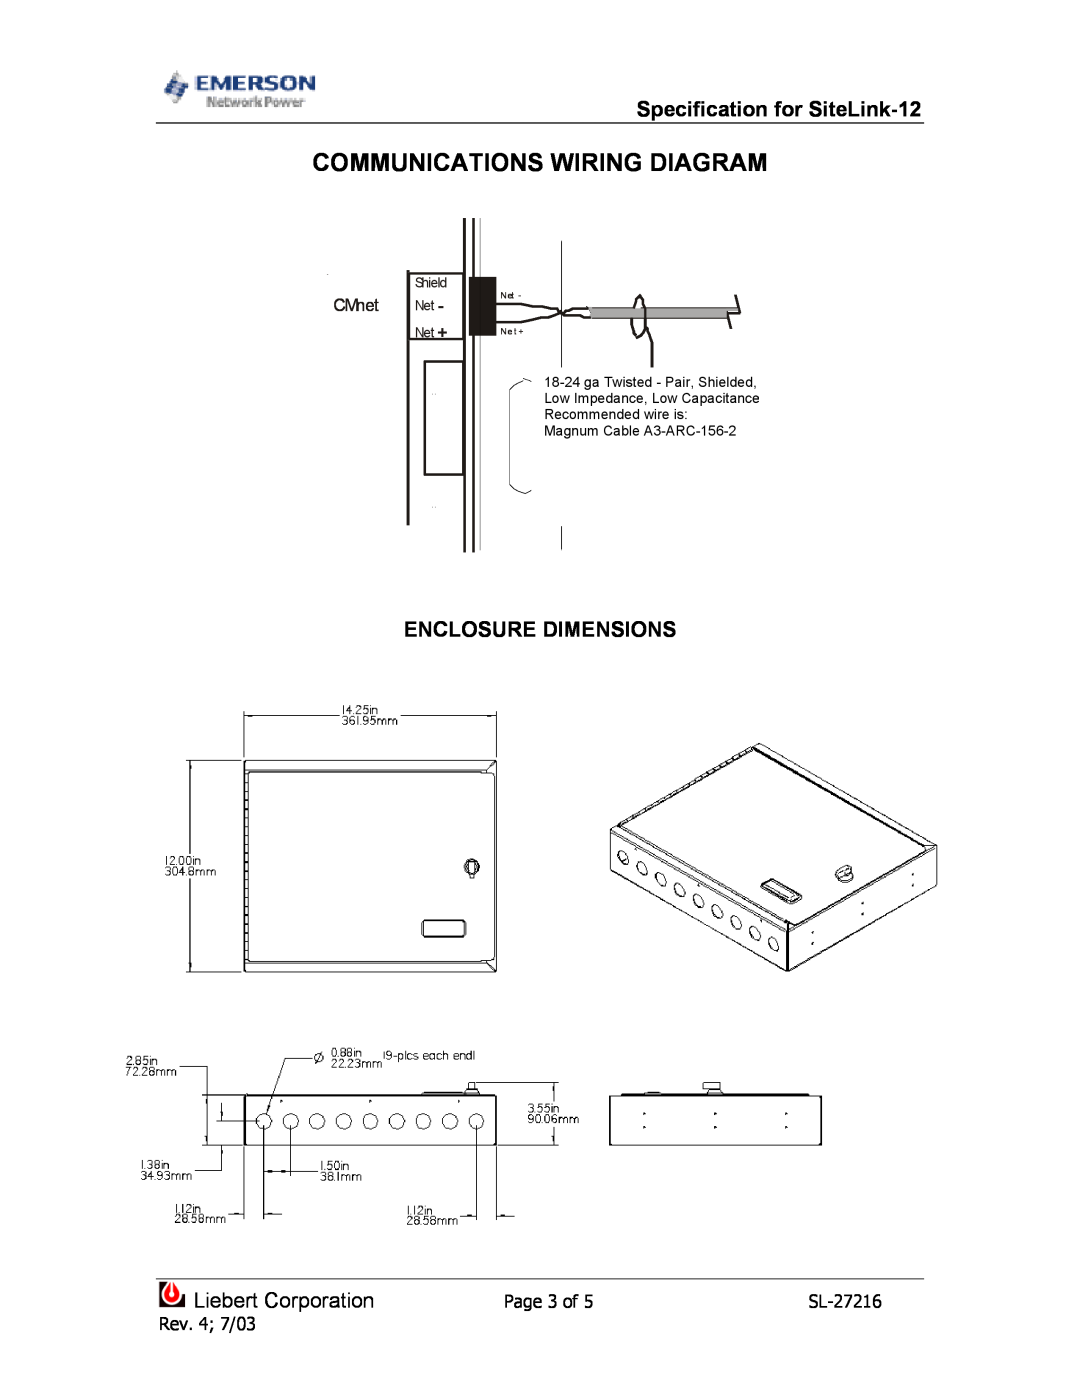 Emerson SiteLink-12 Communications Wiring Diagram, Enclosure Dimensions, Liebert CorporationPage 3 of 5SL-27216, CMnet 